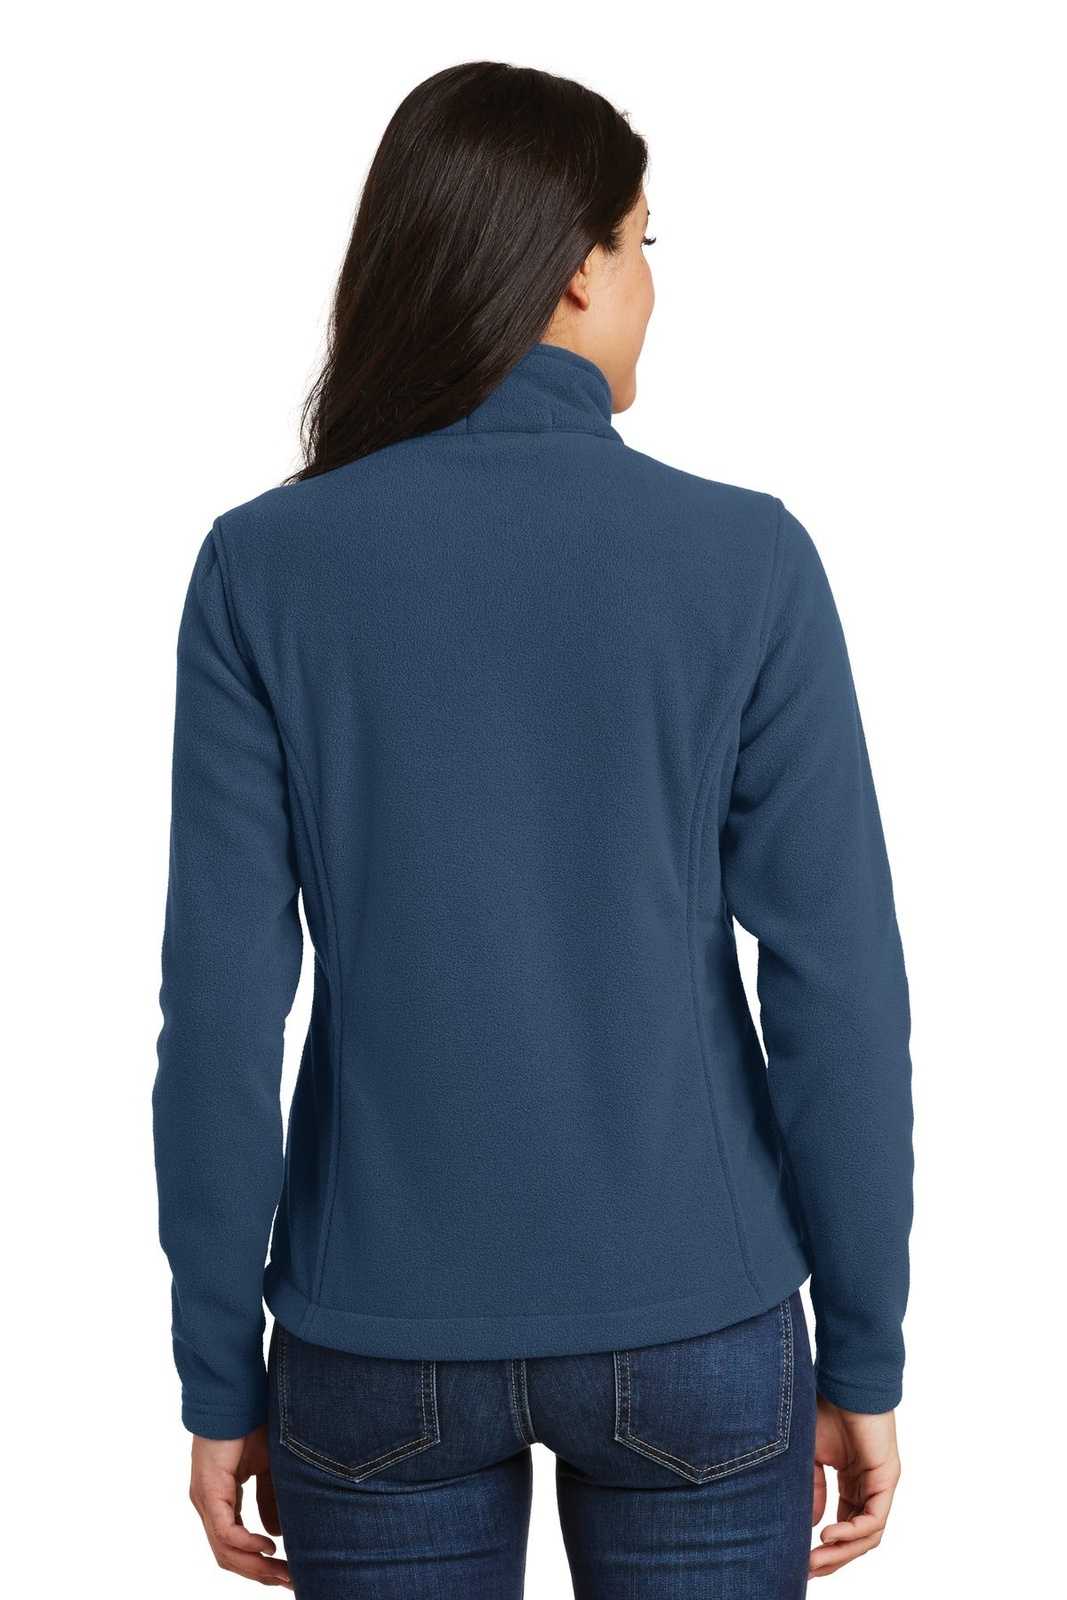 Port Authority L217 Ladies Value Fleece Jacket - Insignia Blue - HIT a Double - 2